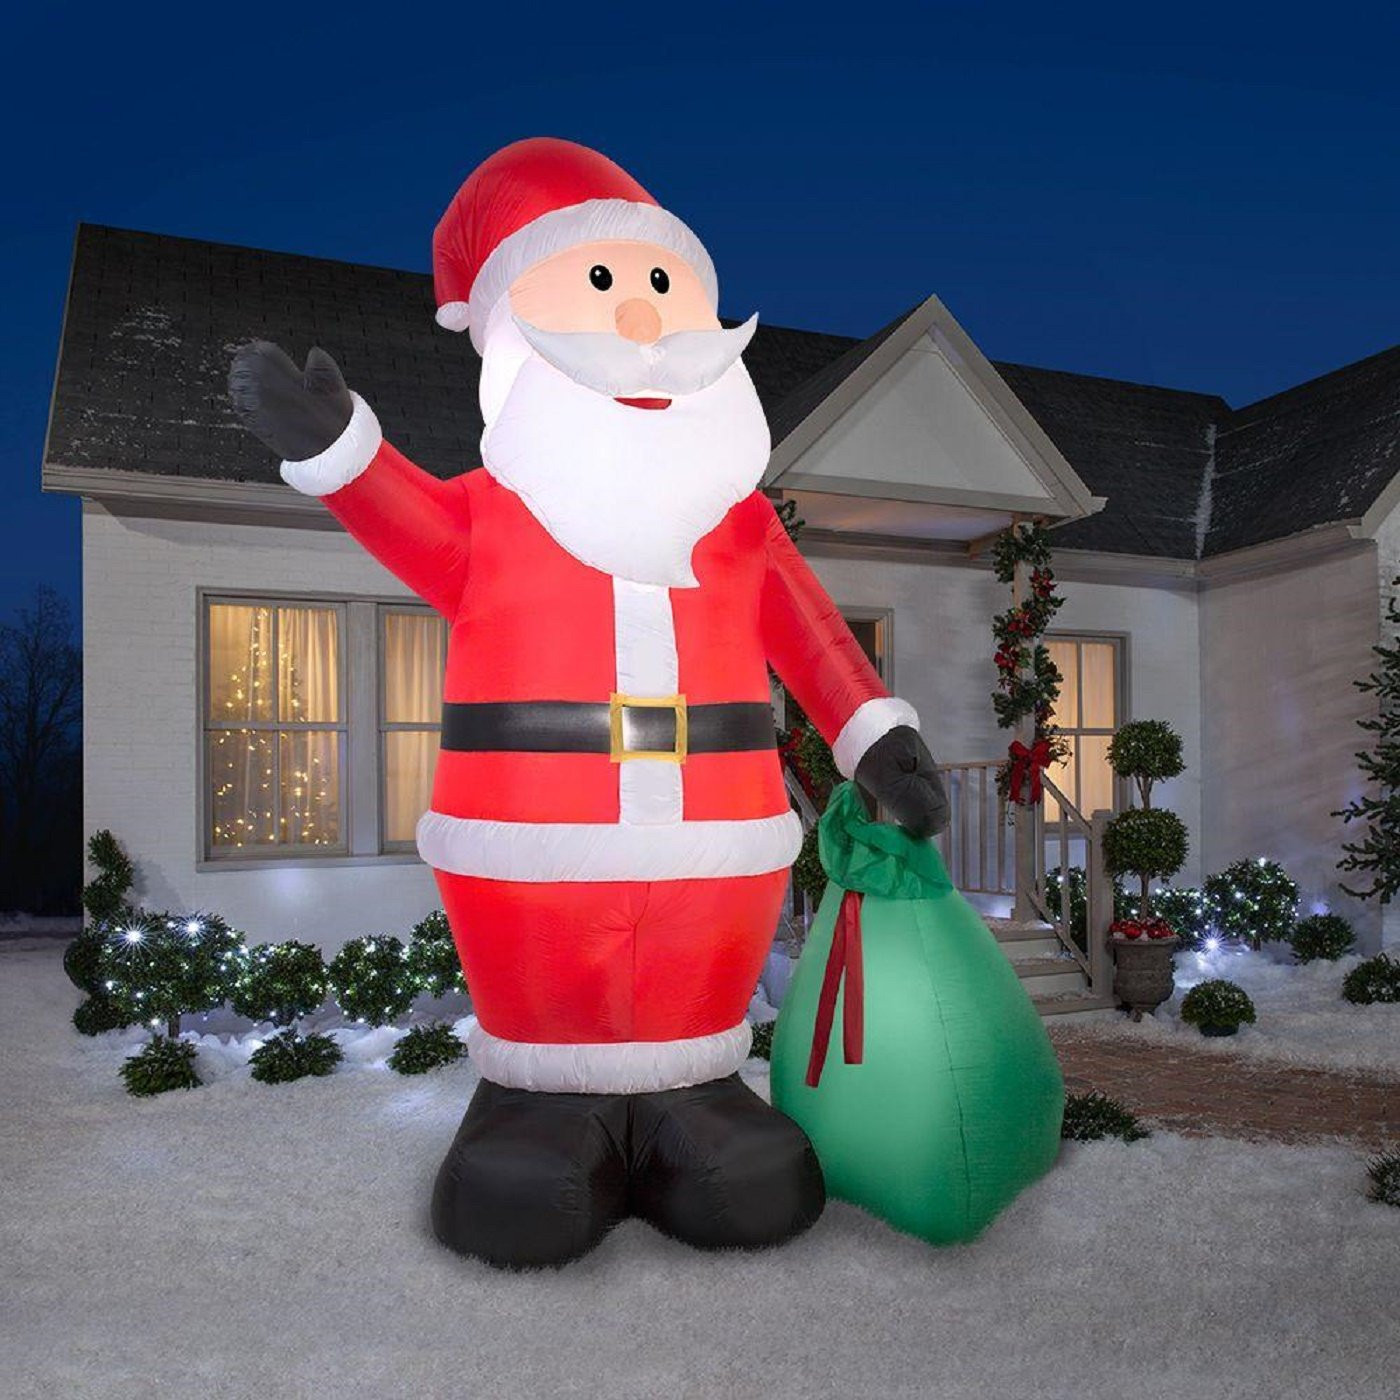 Outdoor Christmas Inflatables
 Airblown Santa Giant Gift Sack Christmas Inflatable